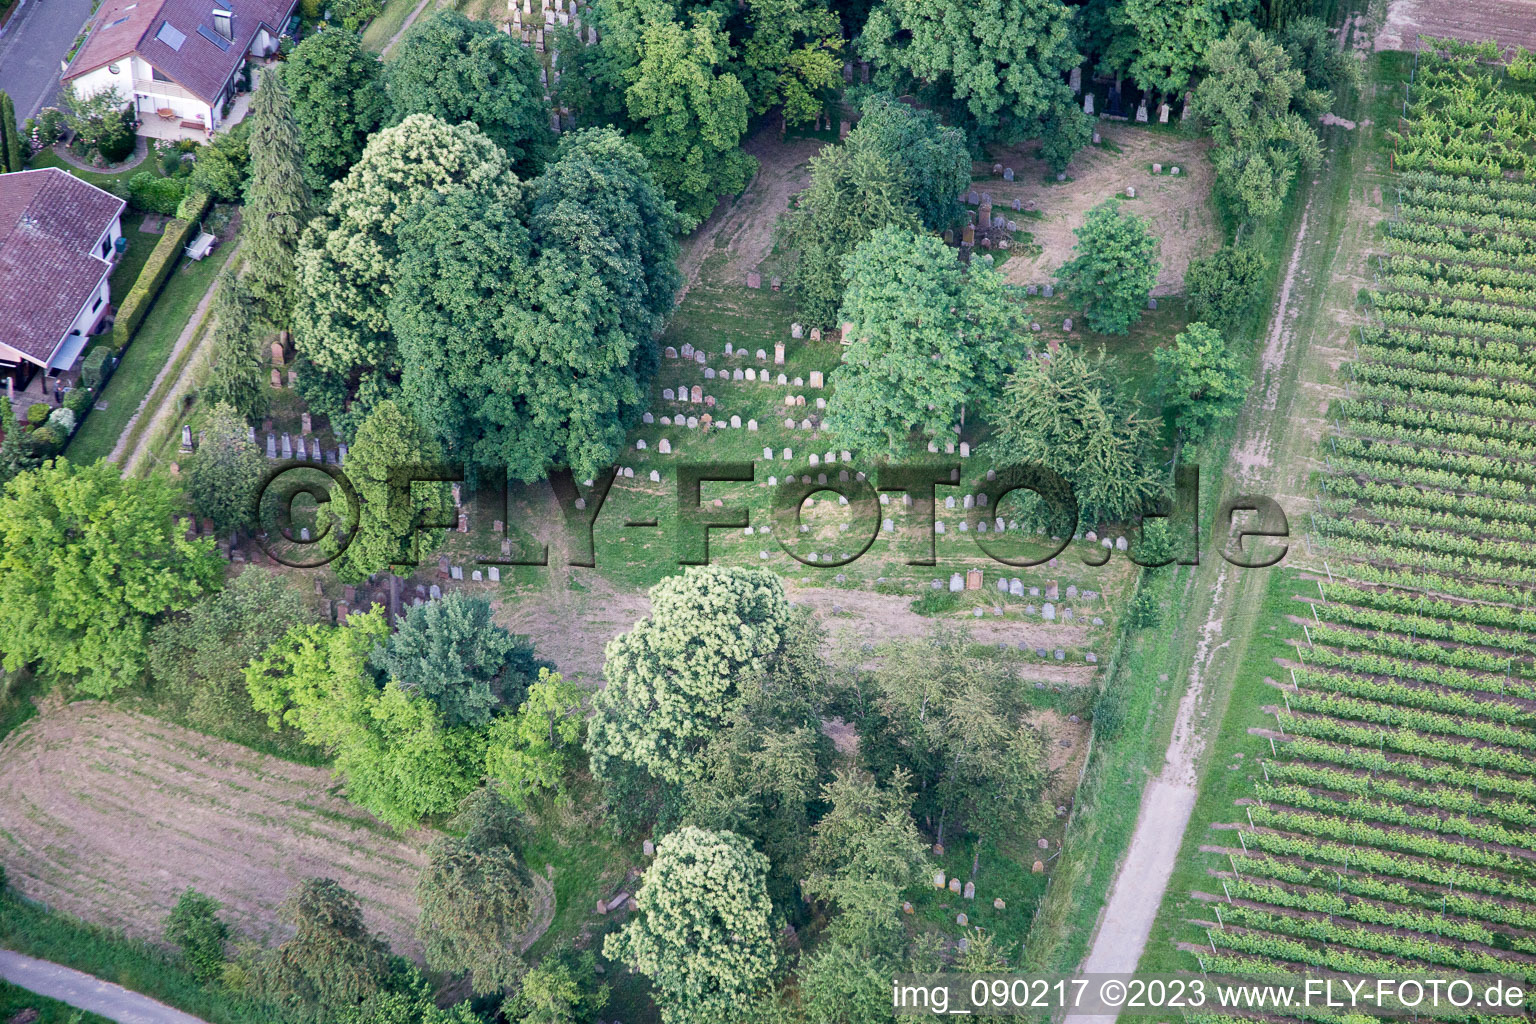 Old graveyard in the district Ingenheim in Billigheim-Ingenheim in the state Rhineland-Palatinate, Germany